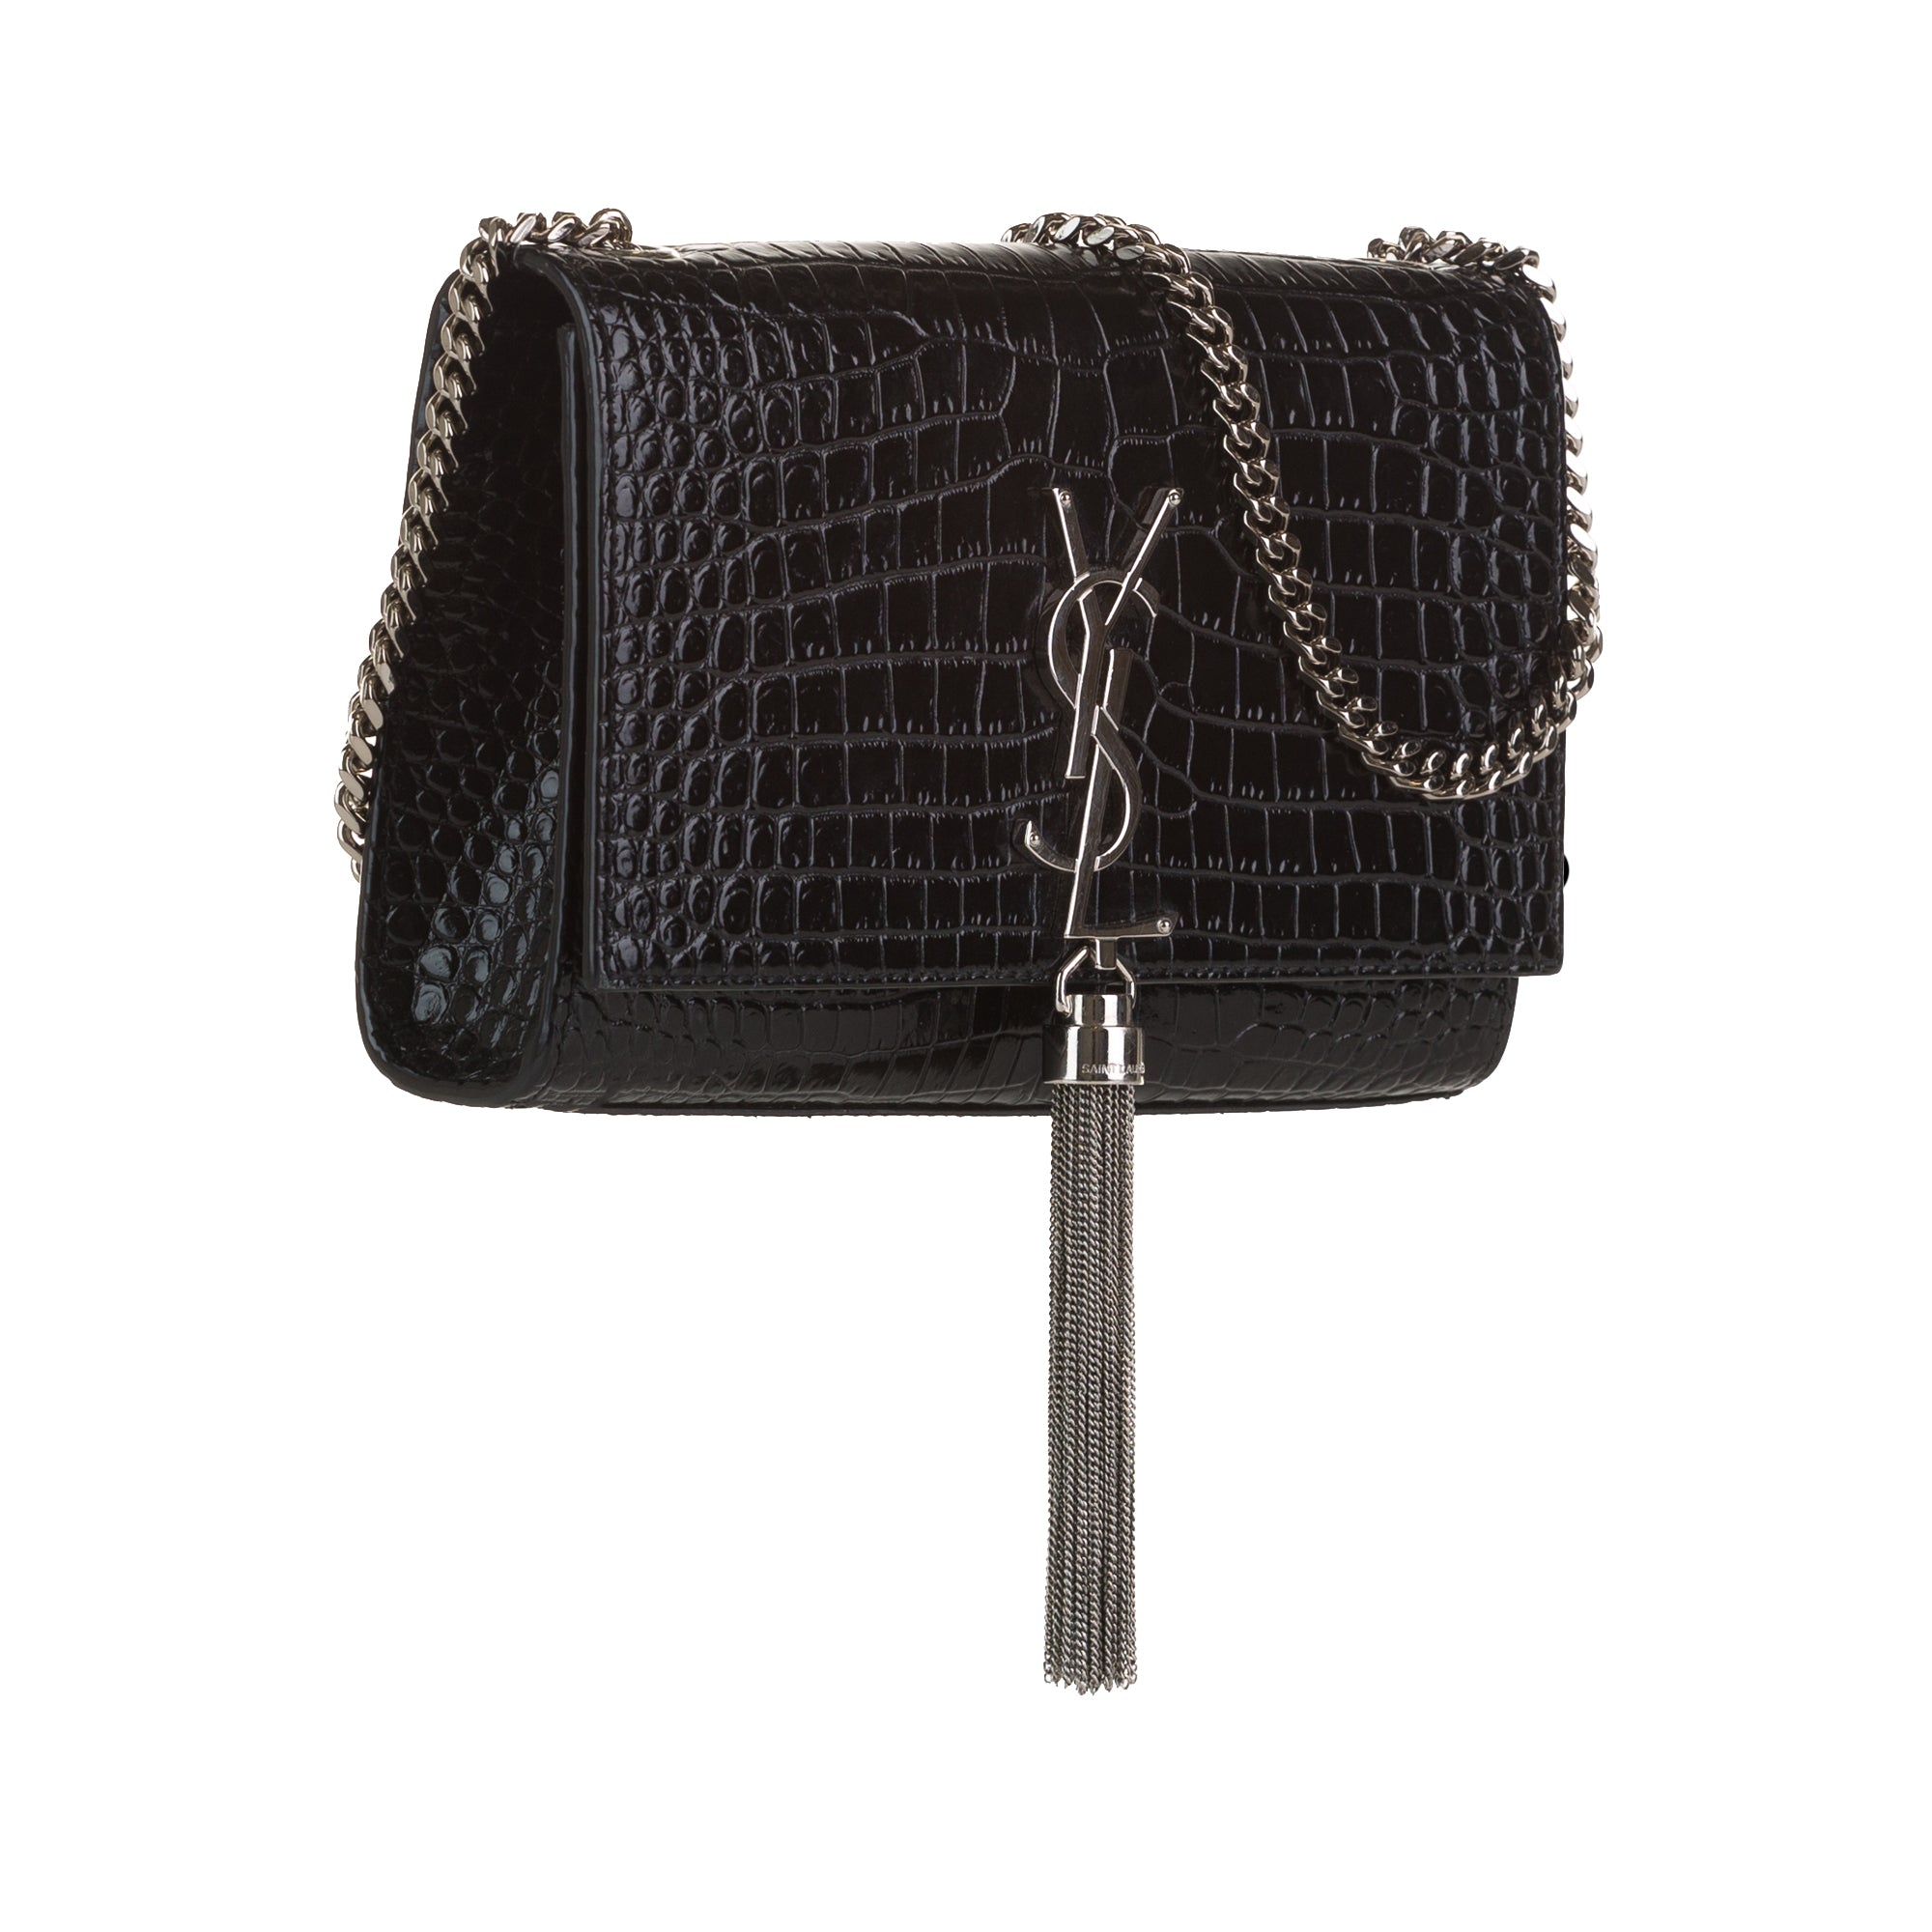 SAINT LAURENT Saint Laurent Monogram Kate Small Tassel Bag Black Croc - Vault 55